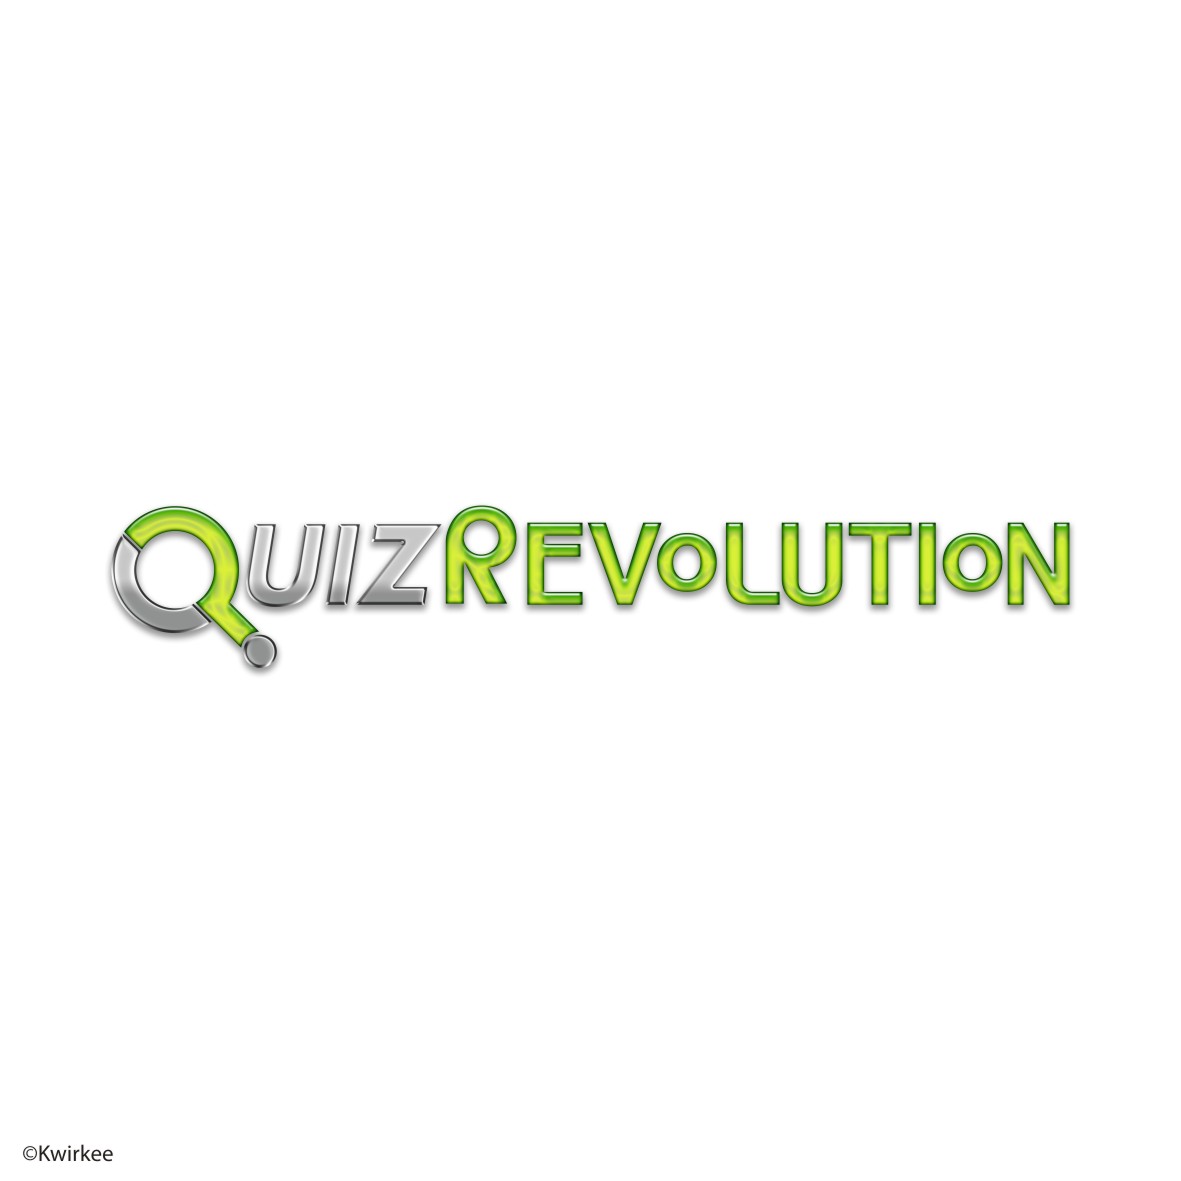 Quizrevolution